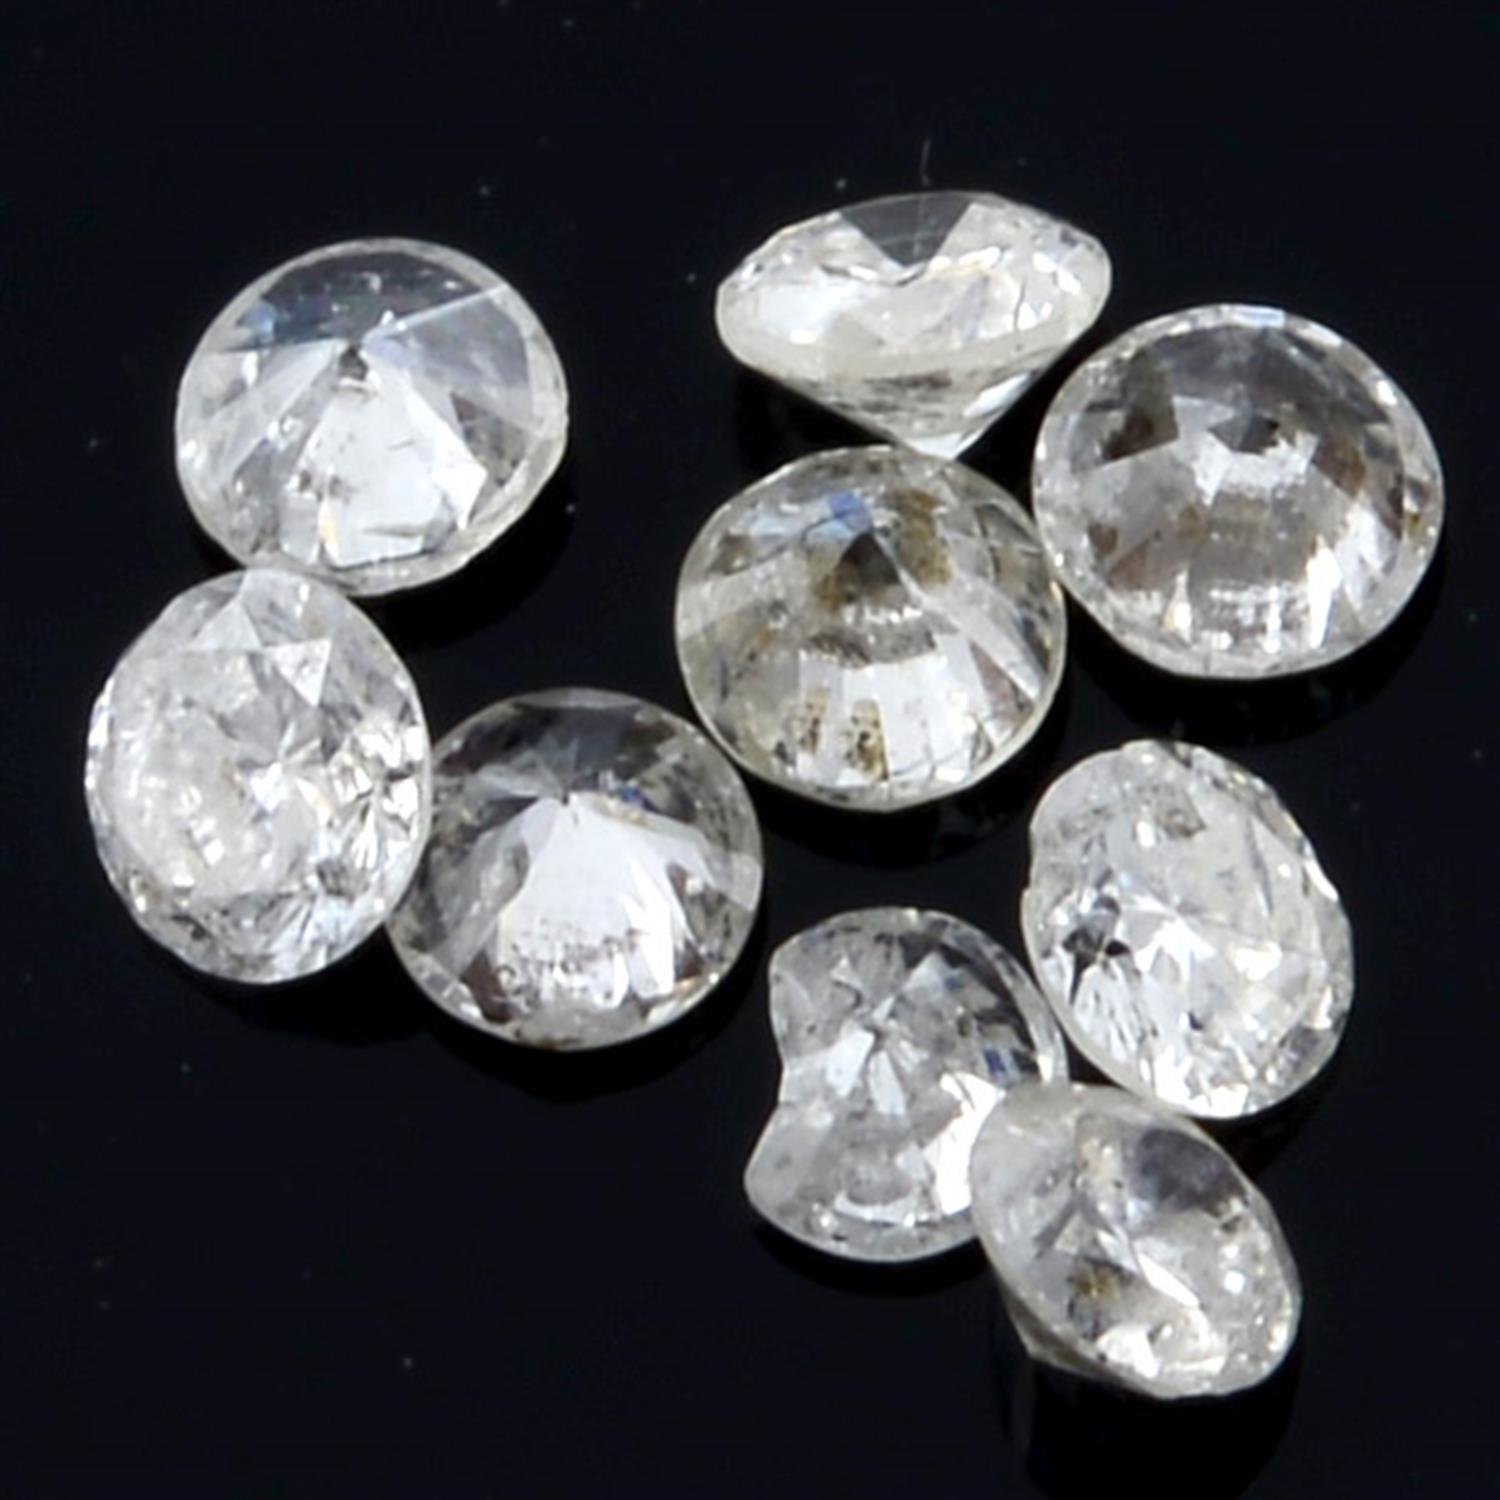 STUART DEVLIN STOCK - Selection of brilliant cut diamonds, weighing 1.45ct